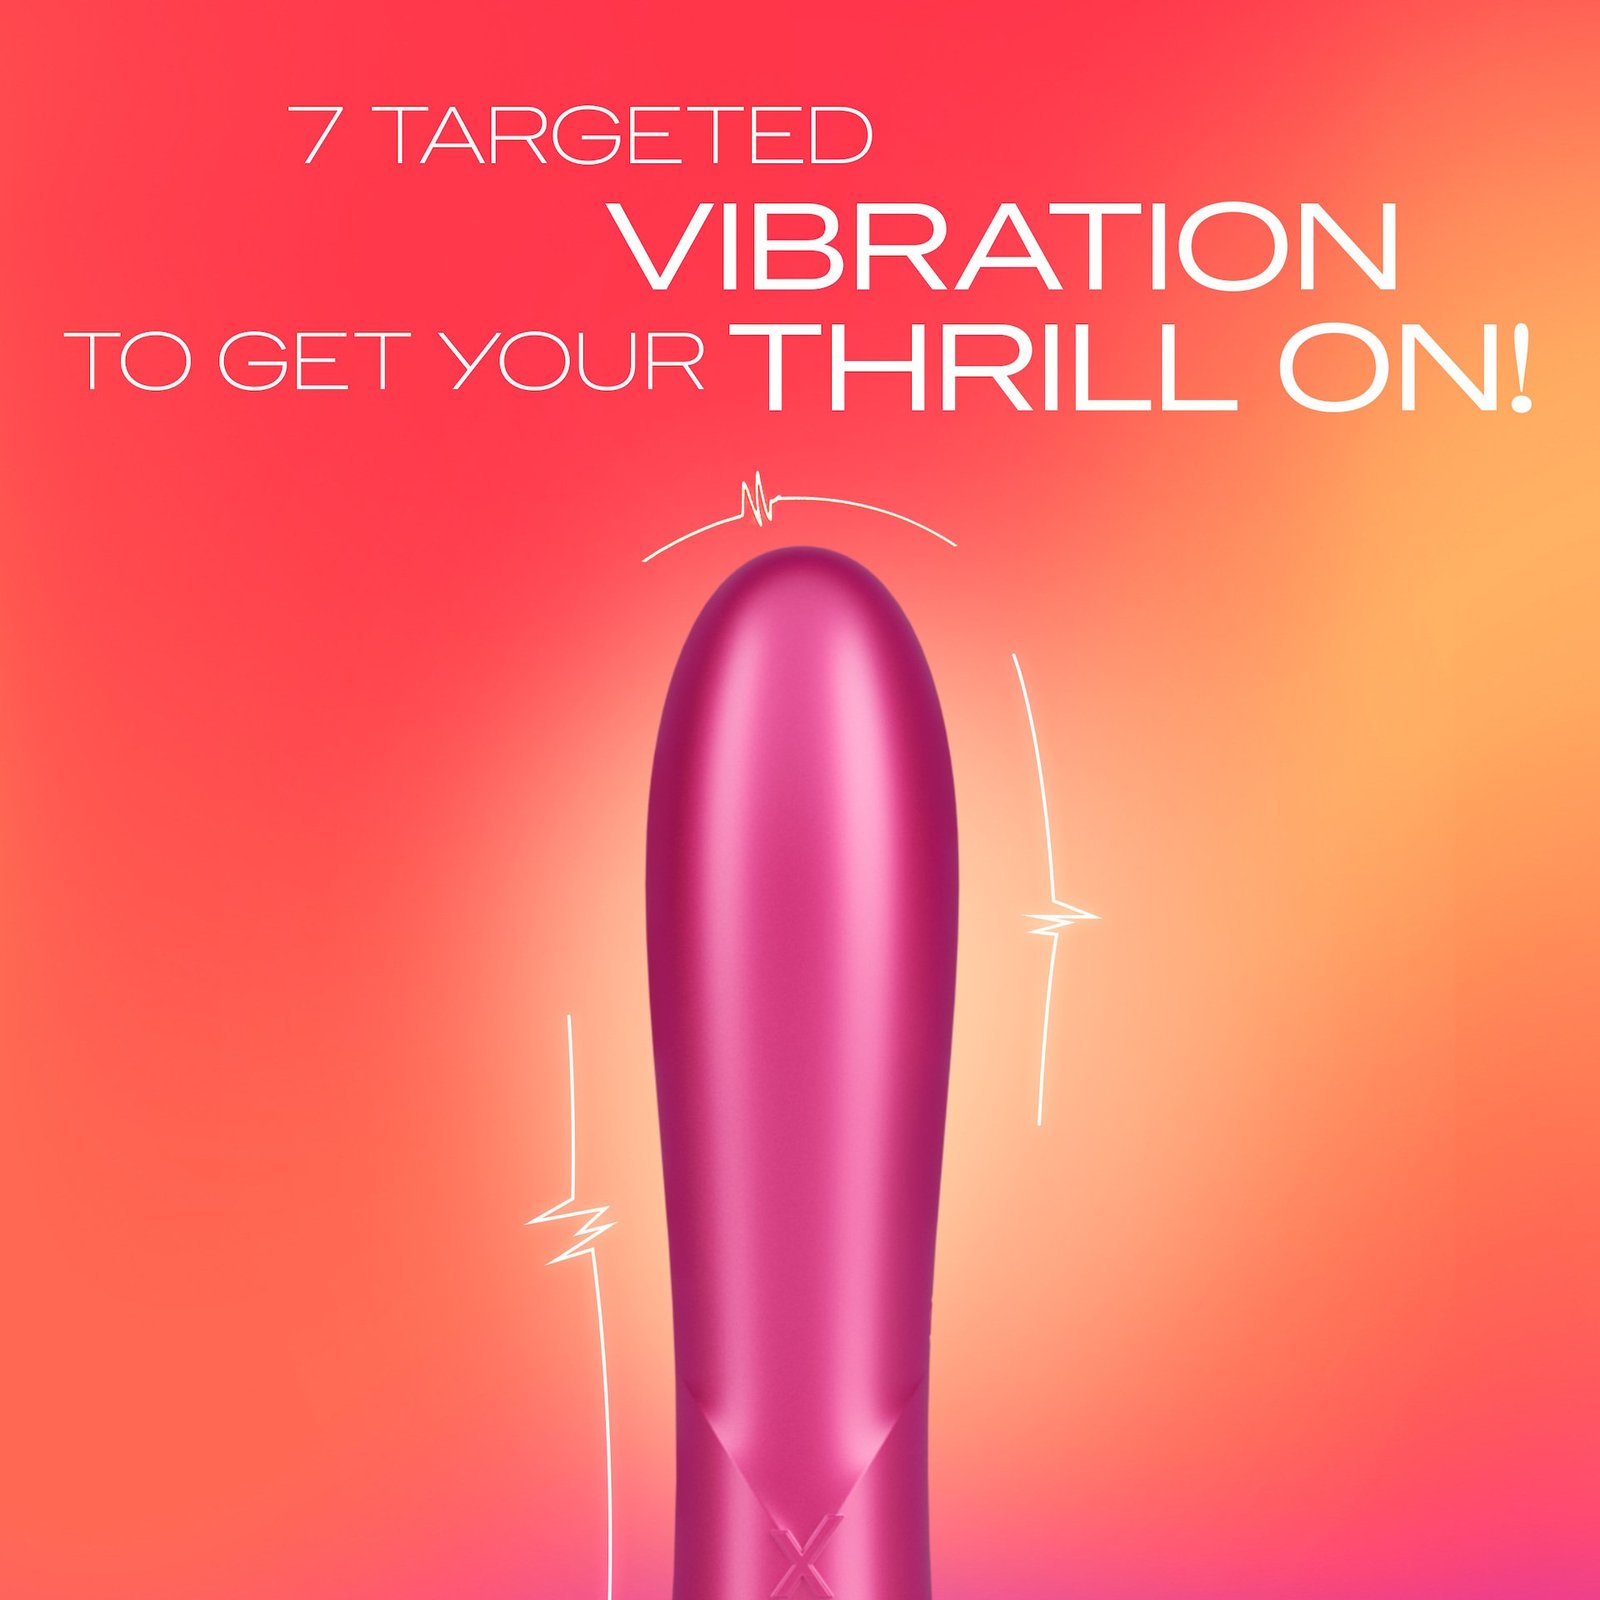 Durex Play 2 in 1 Vibrator & Teaser Tip 1 st